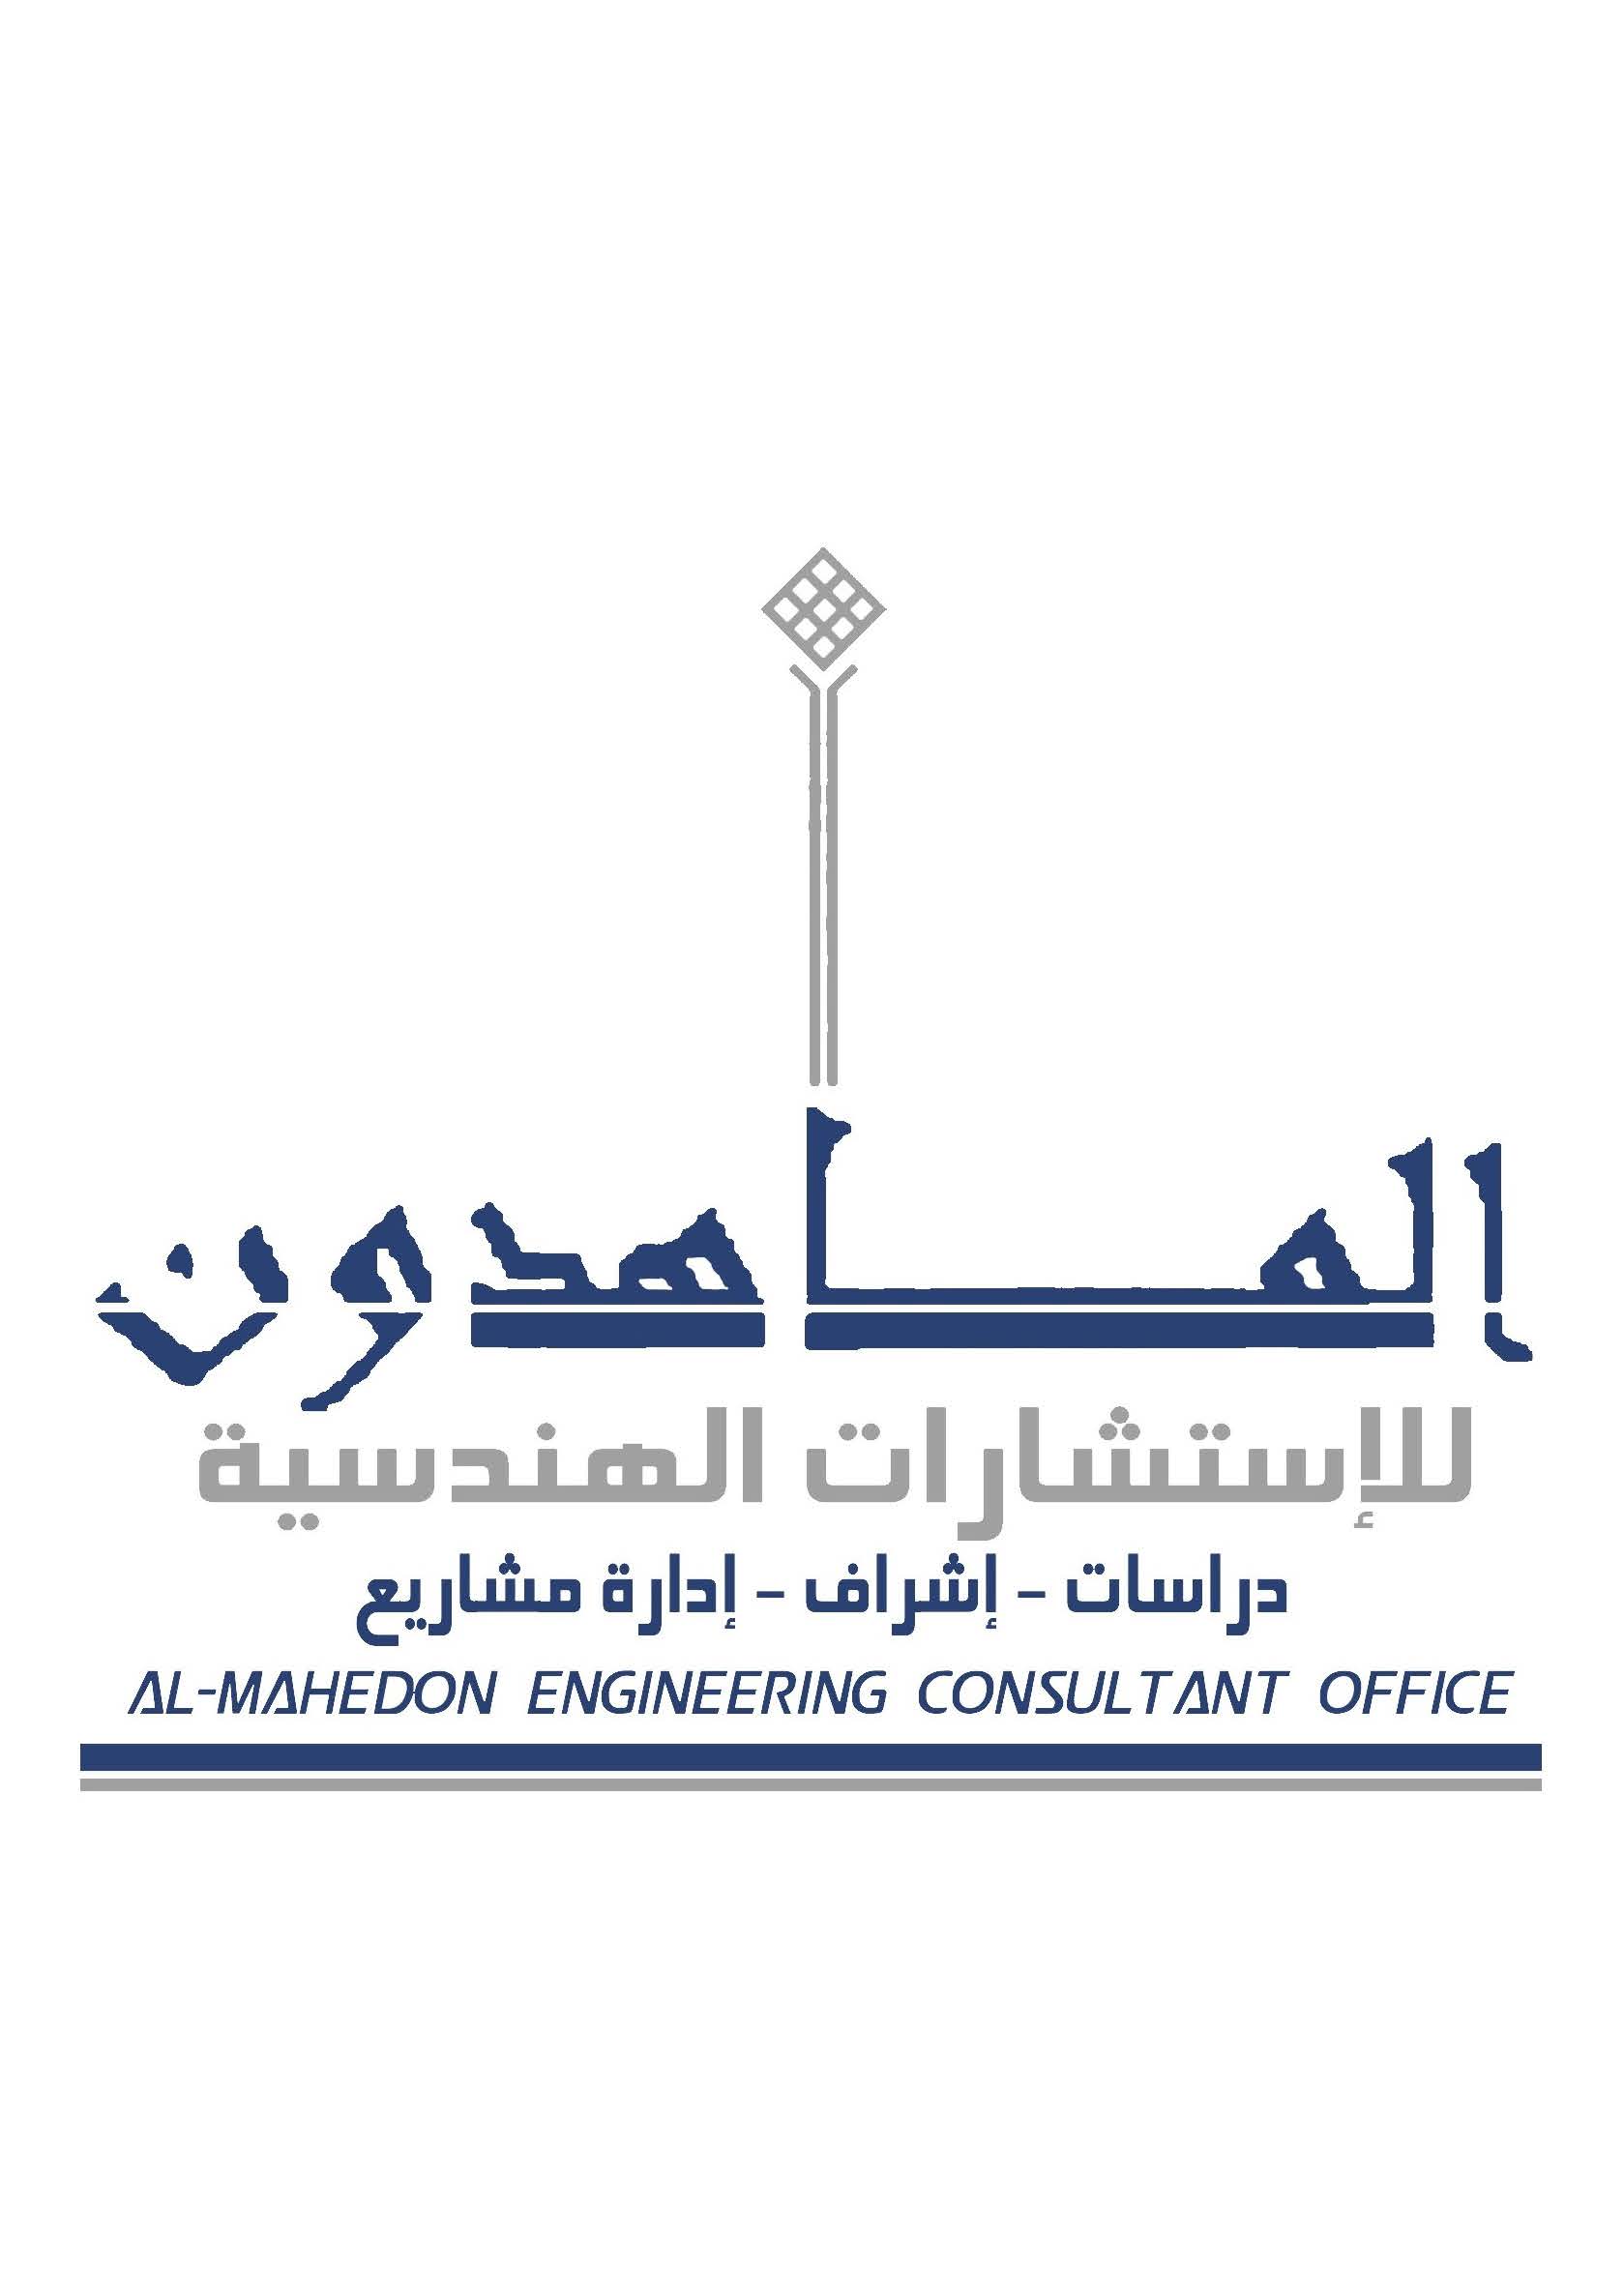 Member Introduction: Almahedon Engineering Consultant Office (Saudi Arabia)